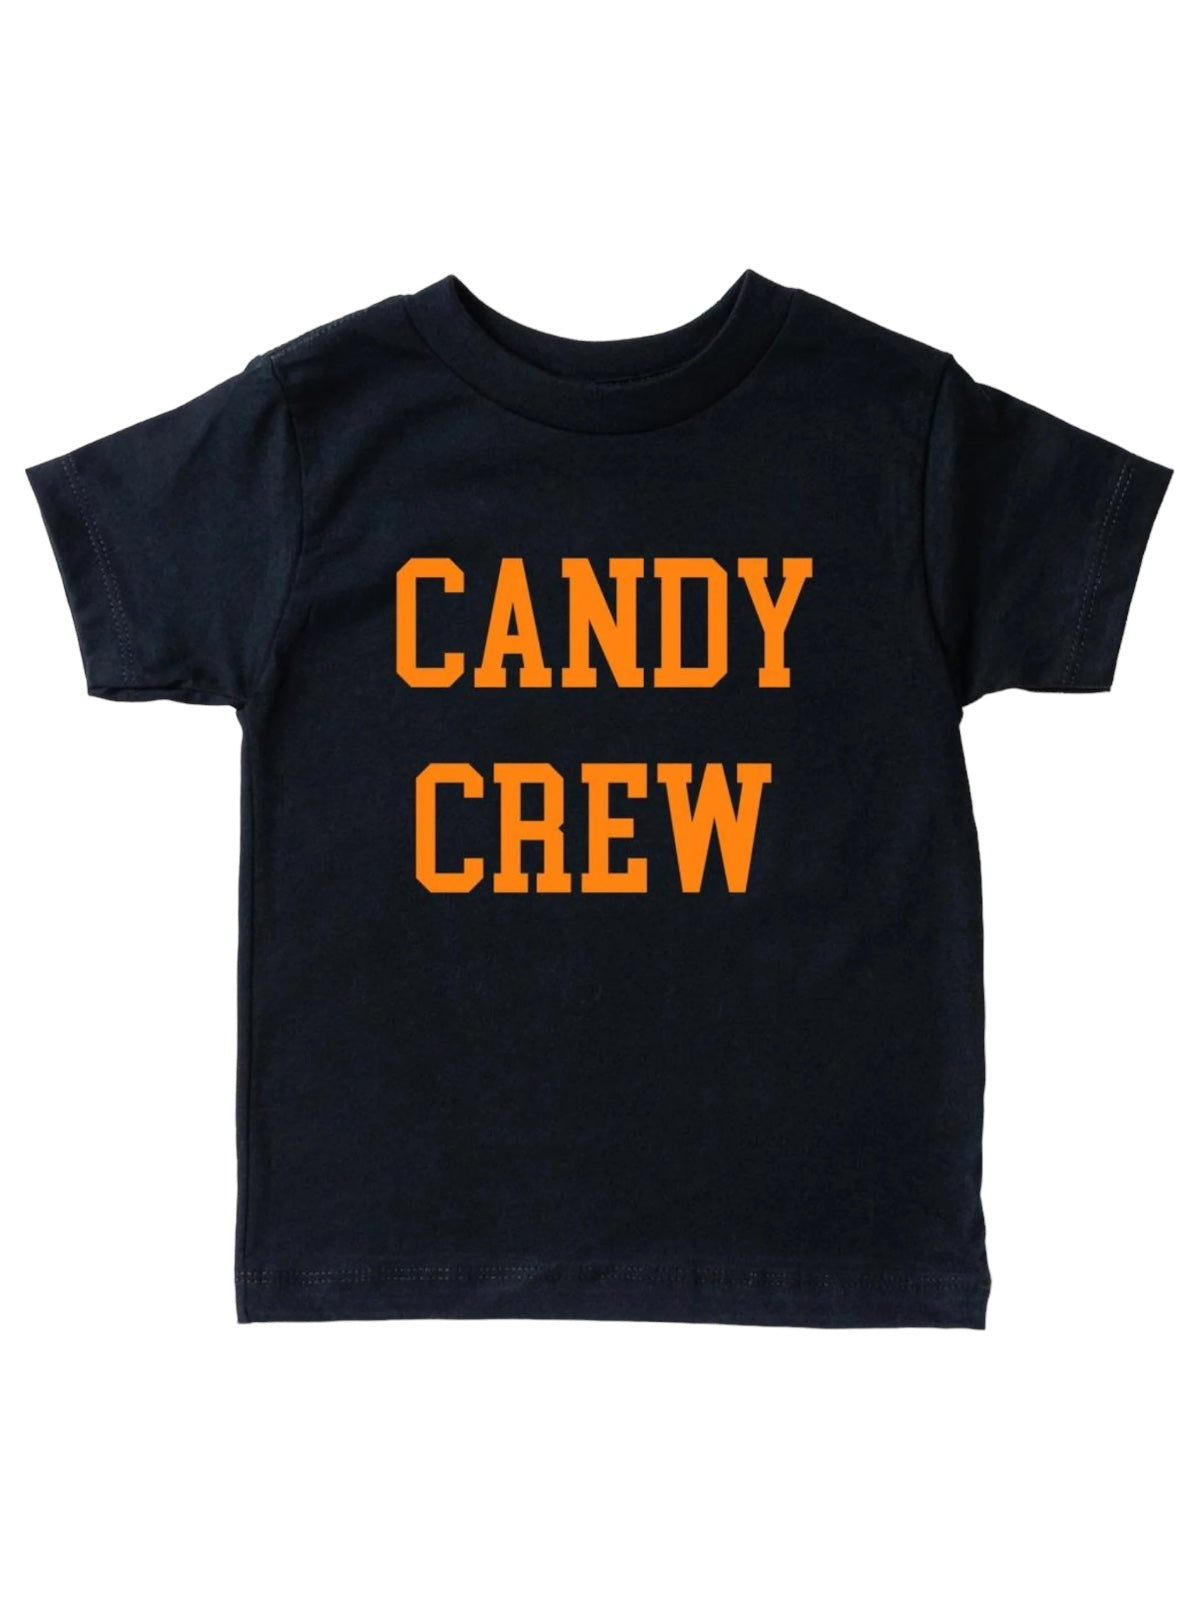 Kid's Graphic Short Sleeve Tee, Candy Crew / Black